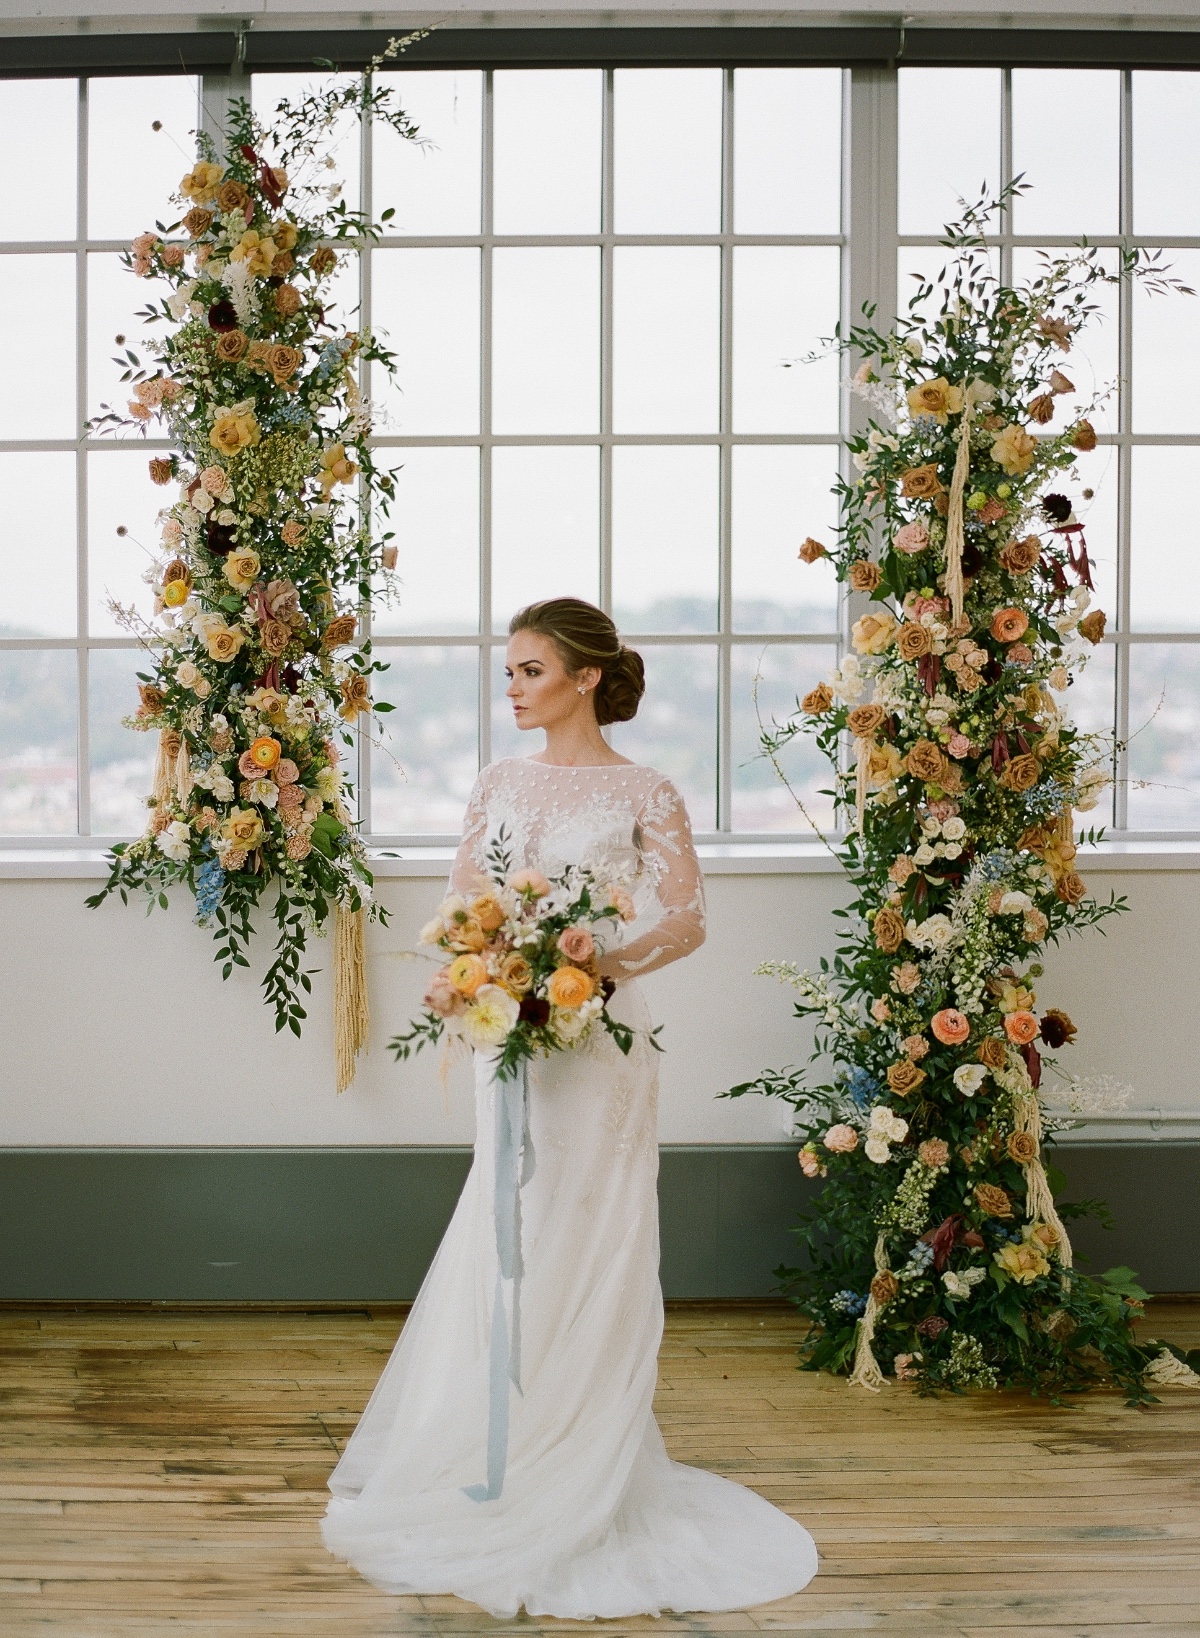 Flower wedding backdrop at warehouse wedding